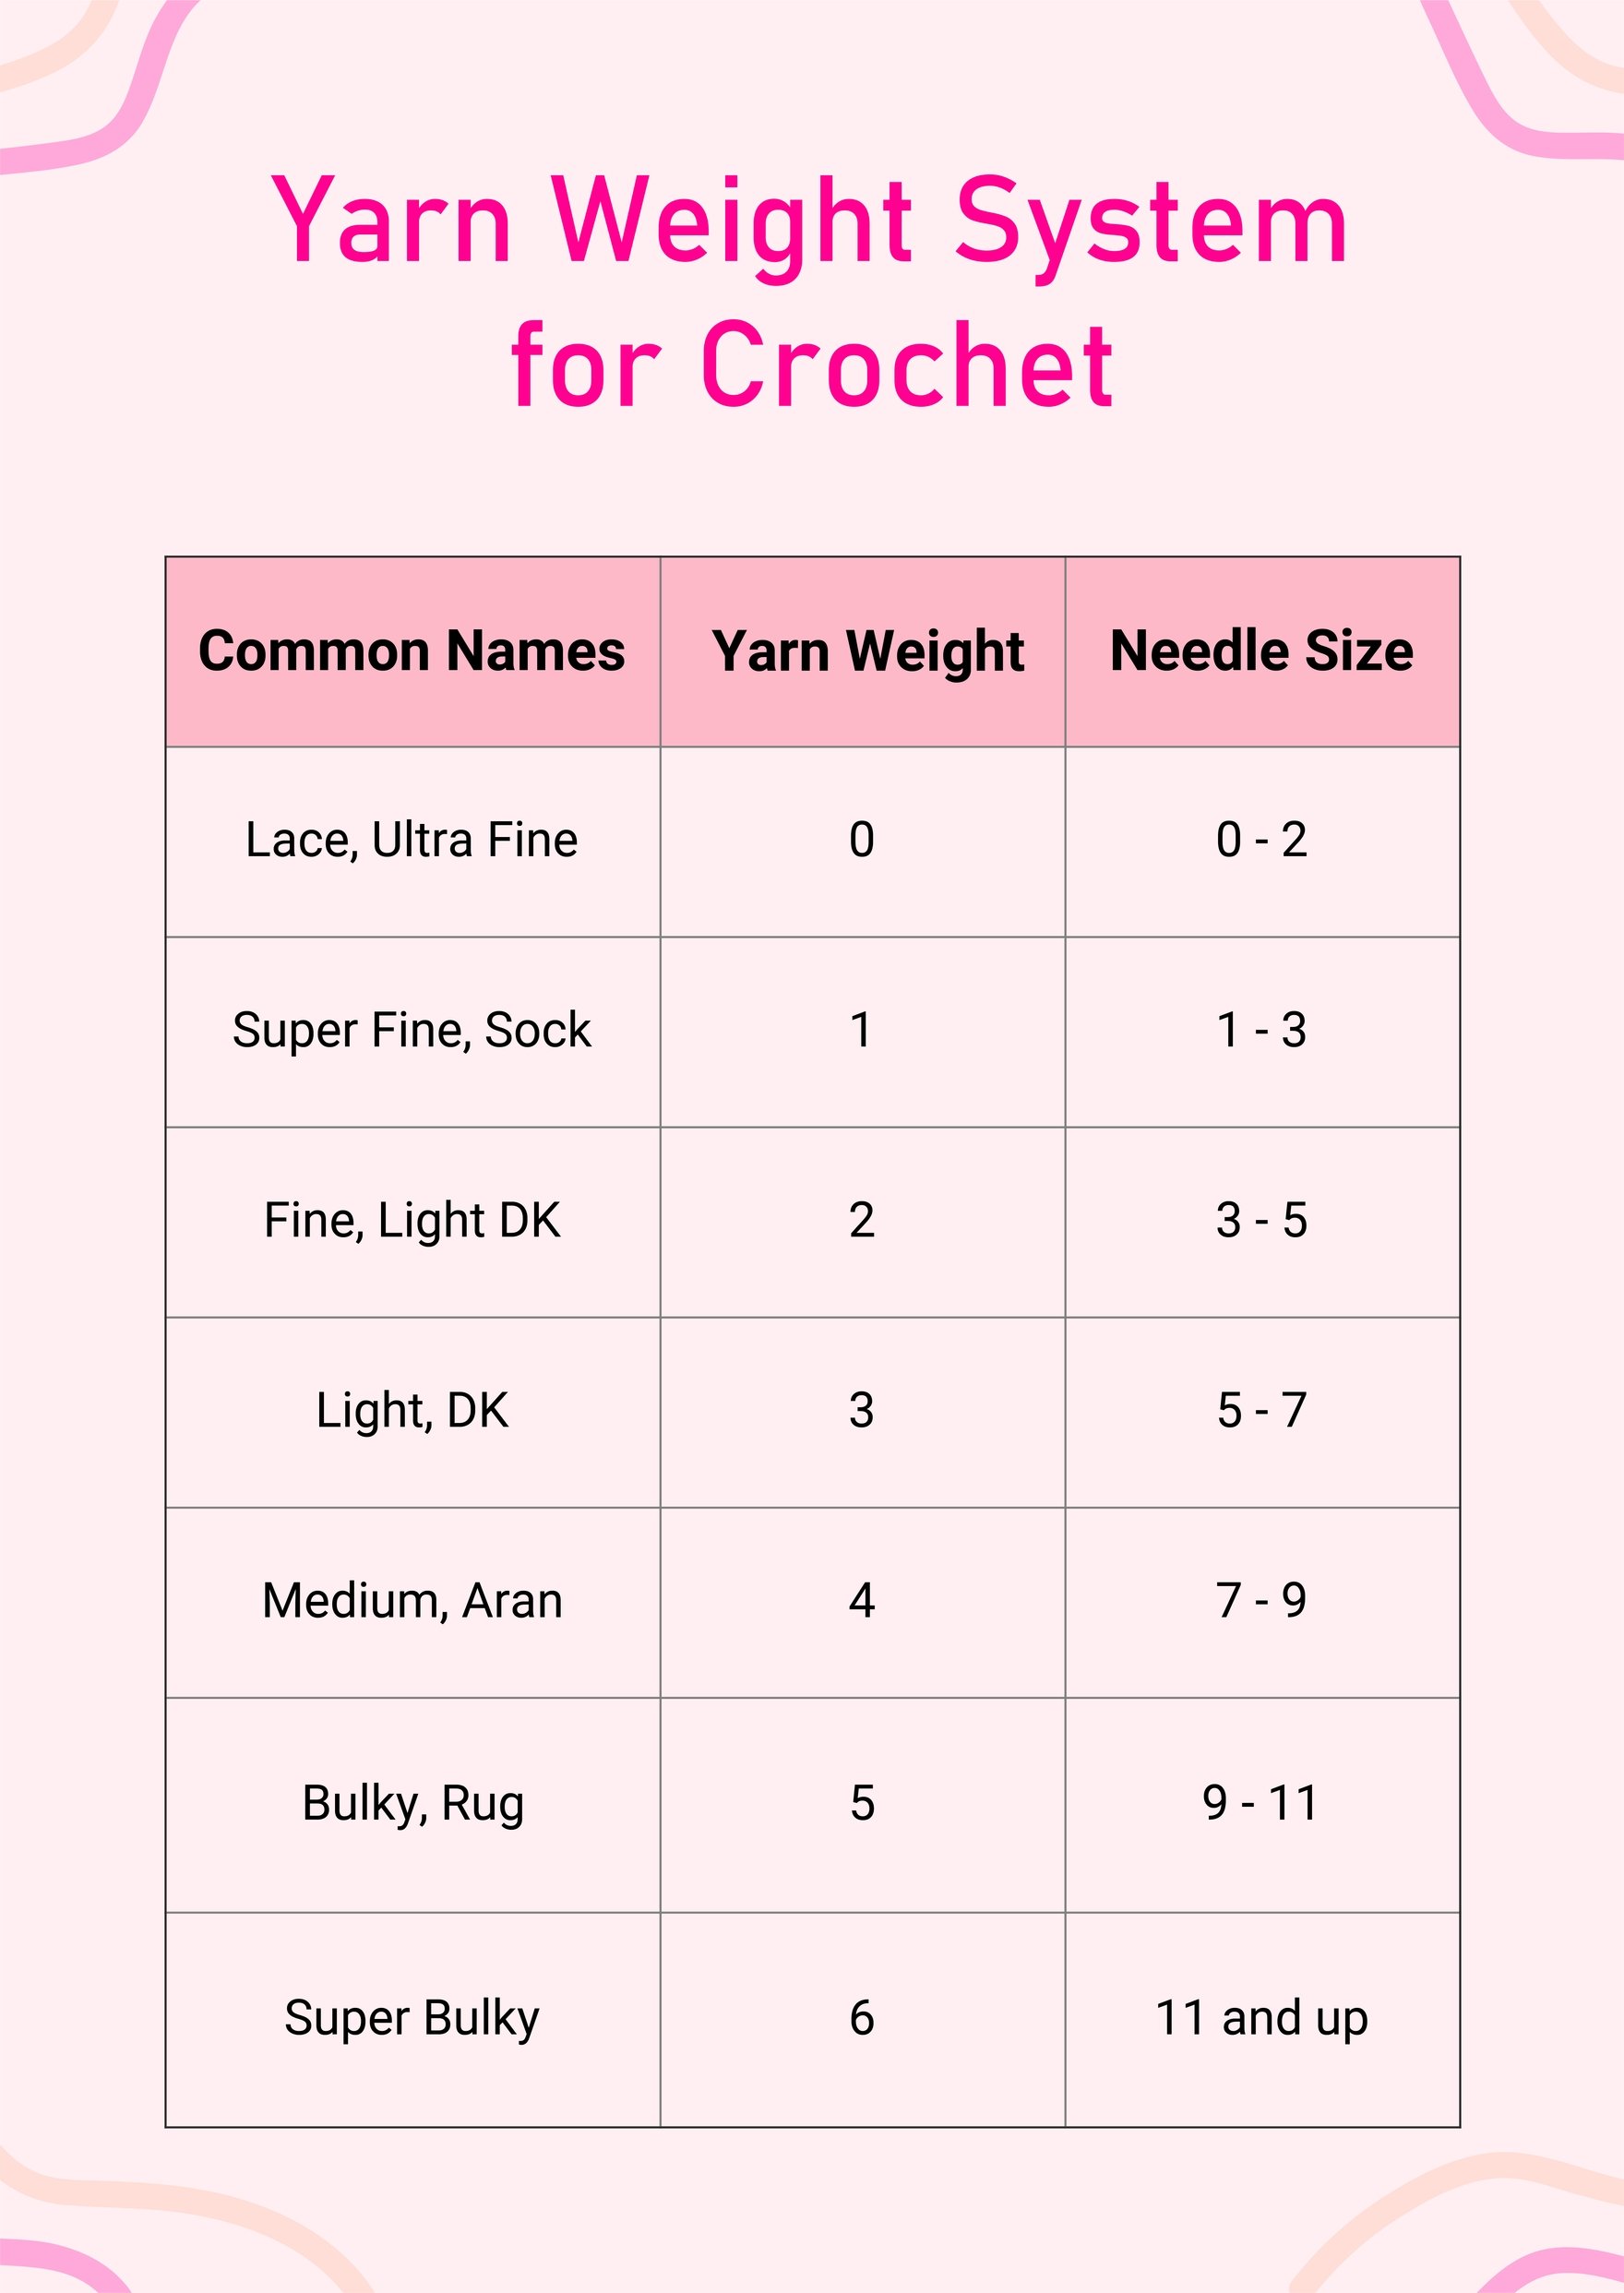 Yarn Weight Chart For Crochet in PDF, Illustrator